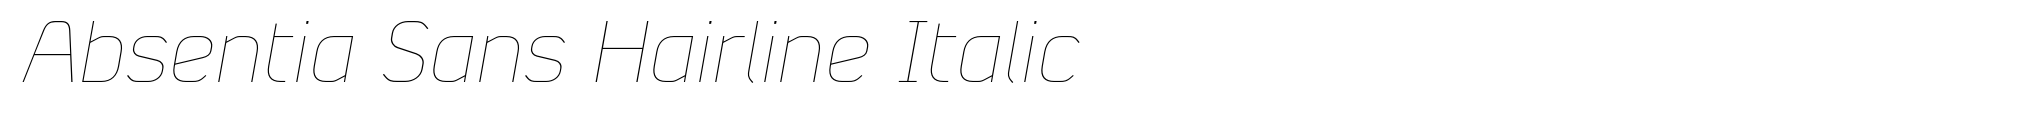 Absentia Sans Hairline Italic image